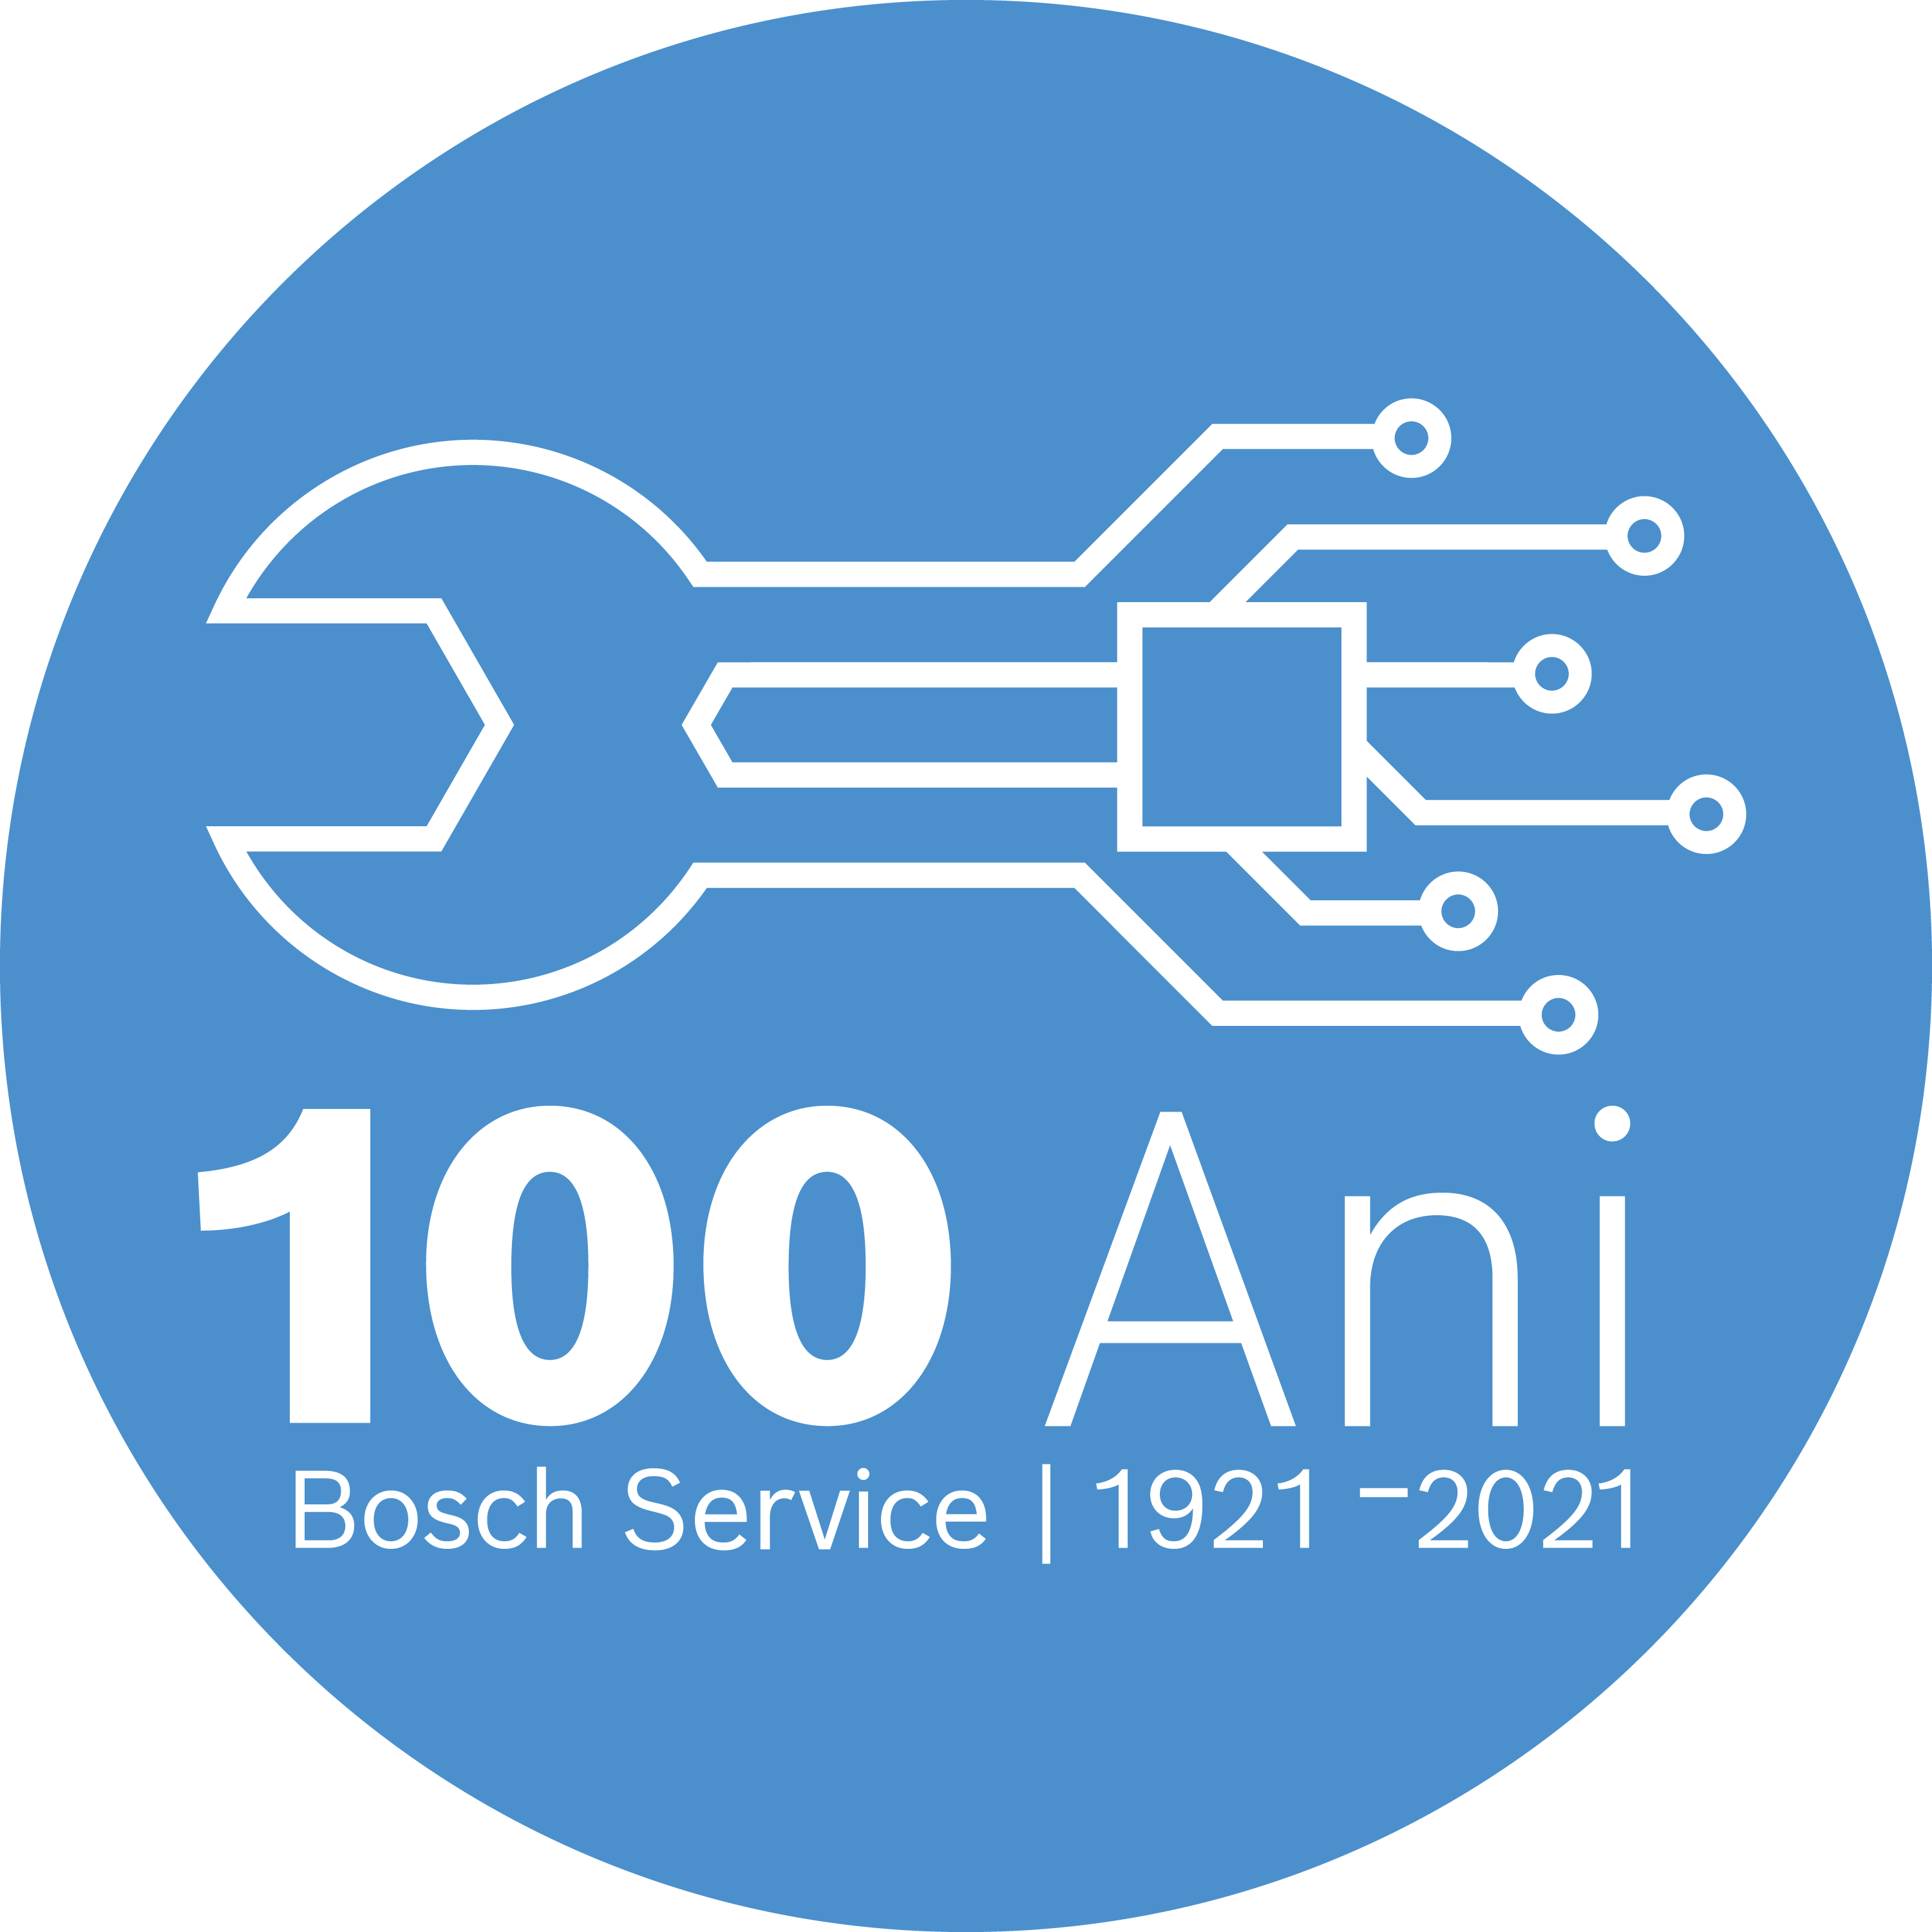 100 Years Bosch Service | 1921-2021